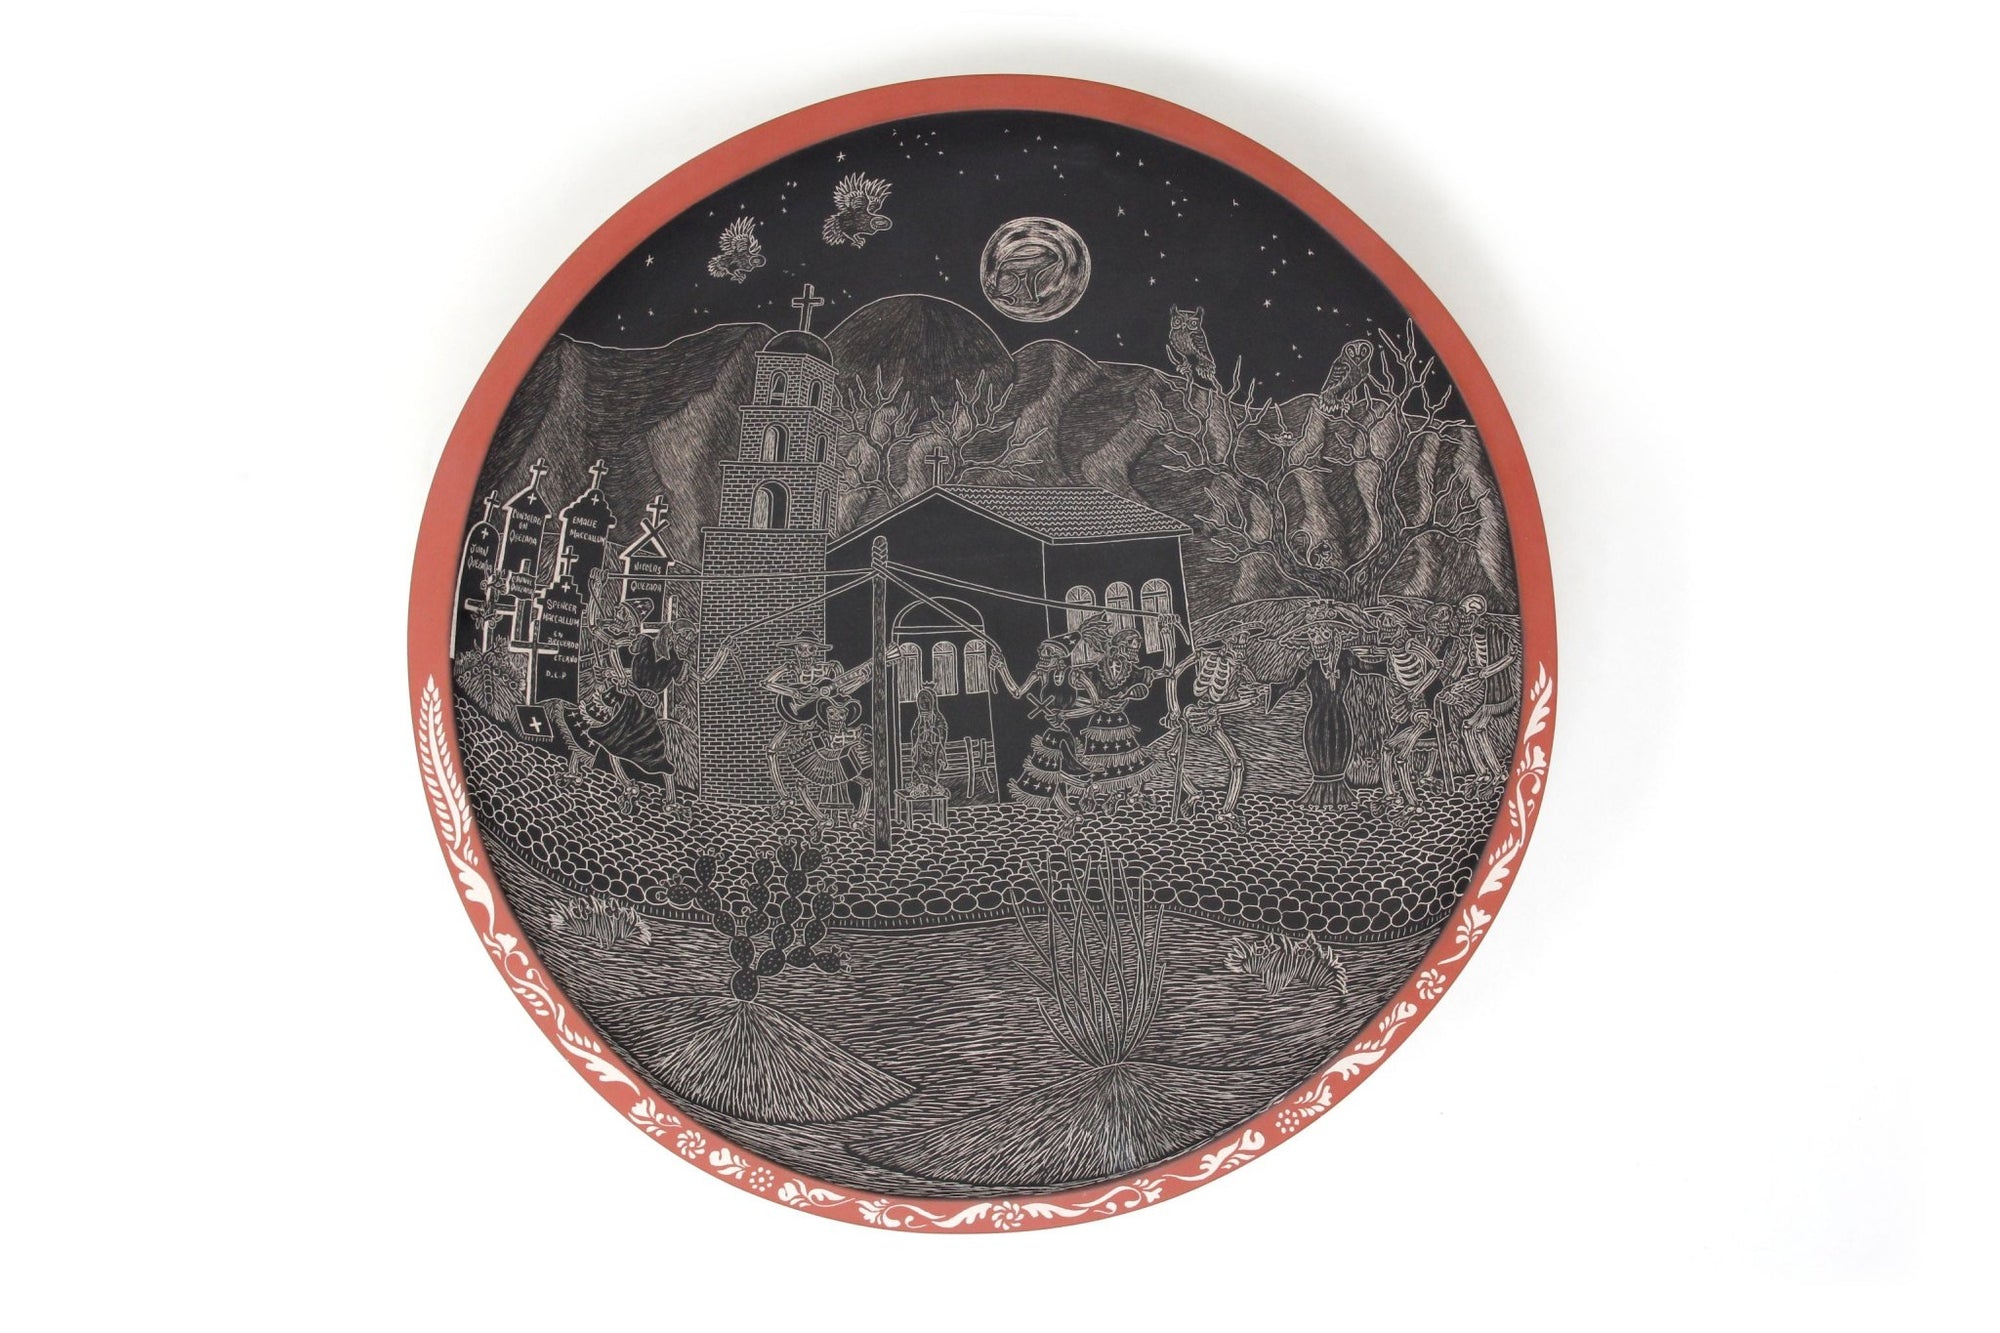 Mata Ortiz Ceramic - Day of the Dead Plate Rabbit in the Moon at Night - Huichol Art - マラカメ